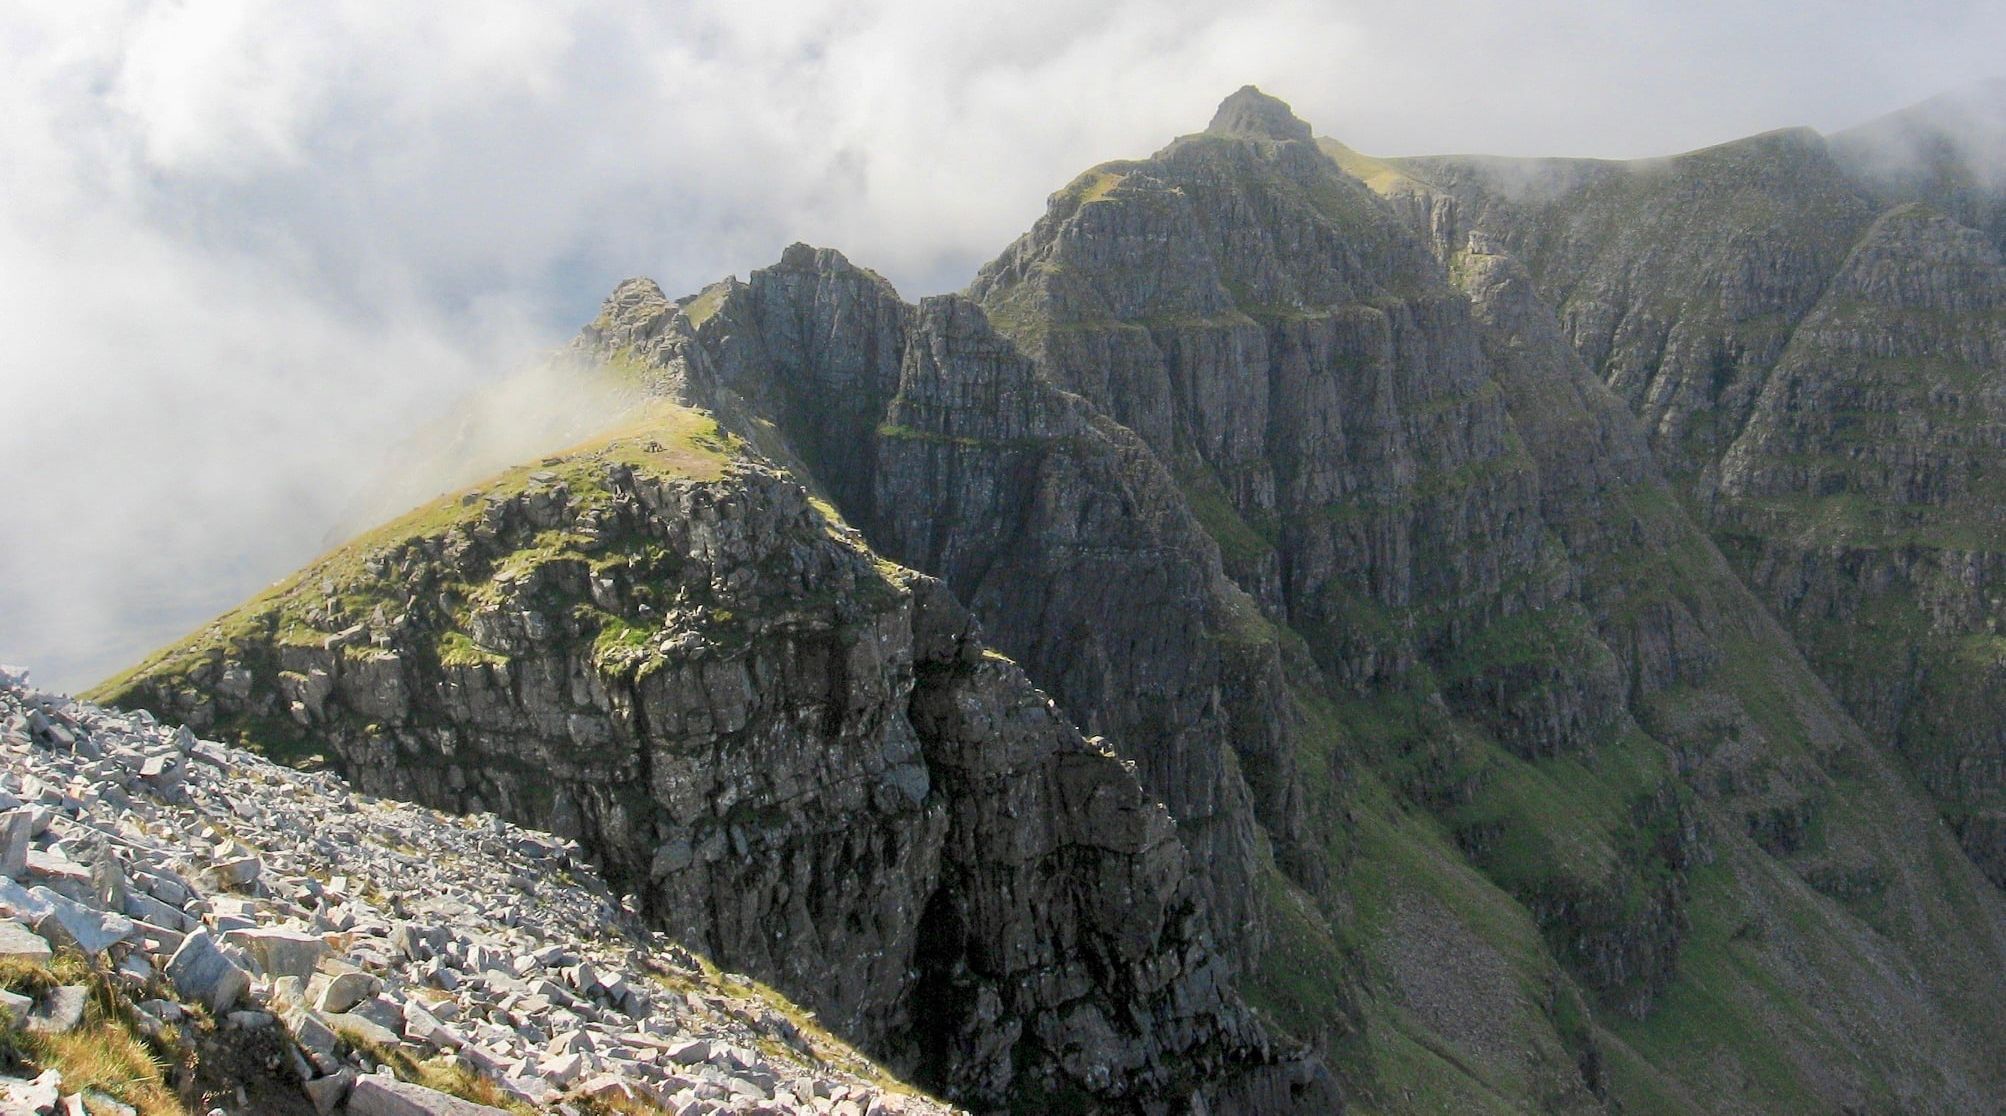 Am Fasasinen section on Liathach ridge